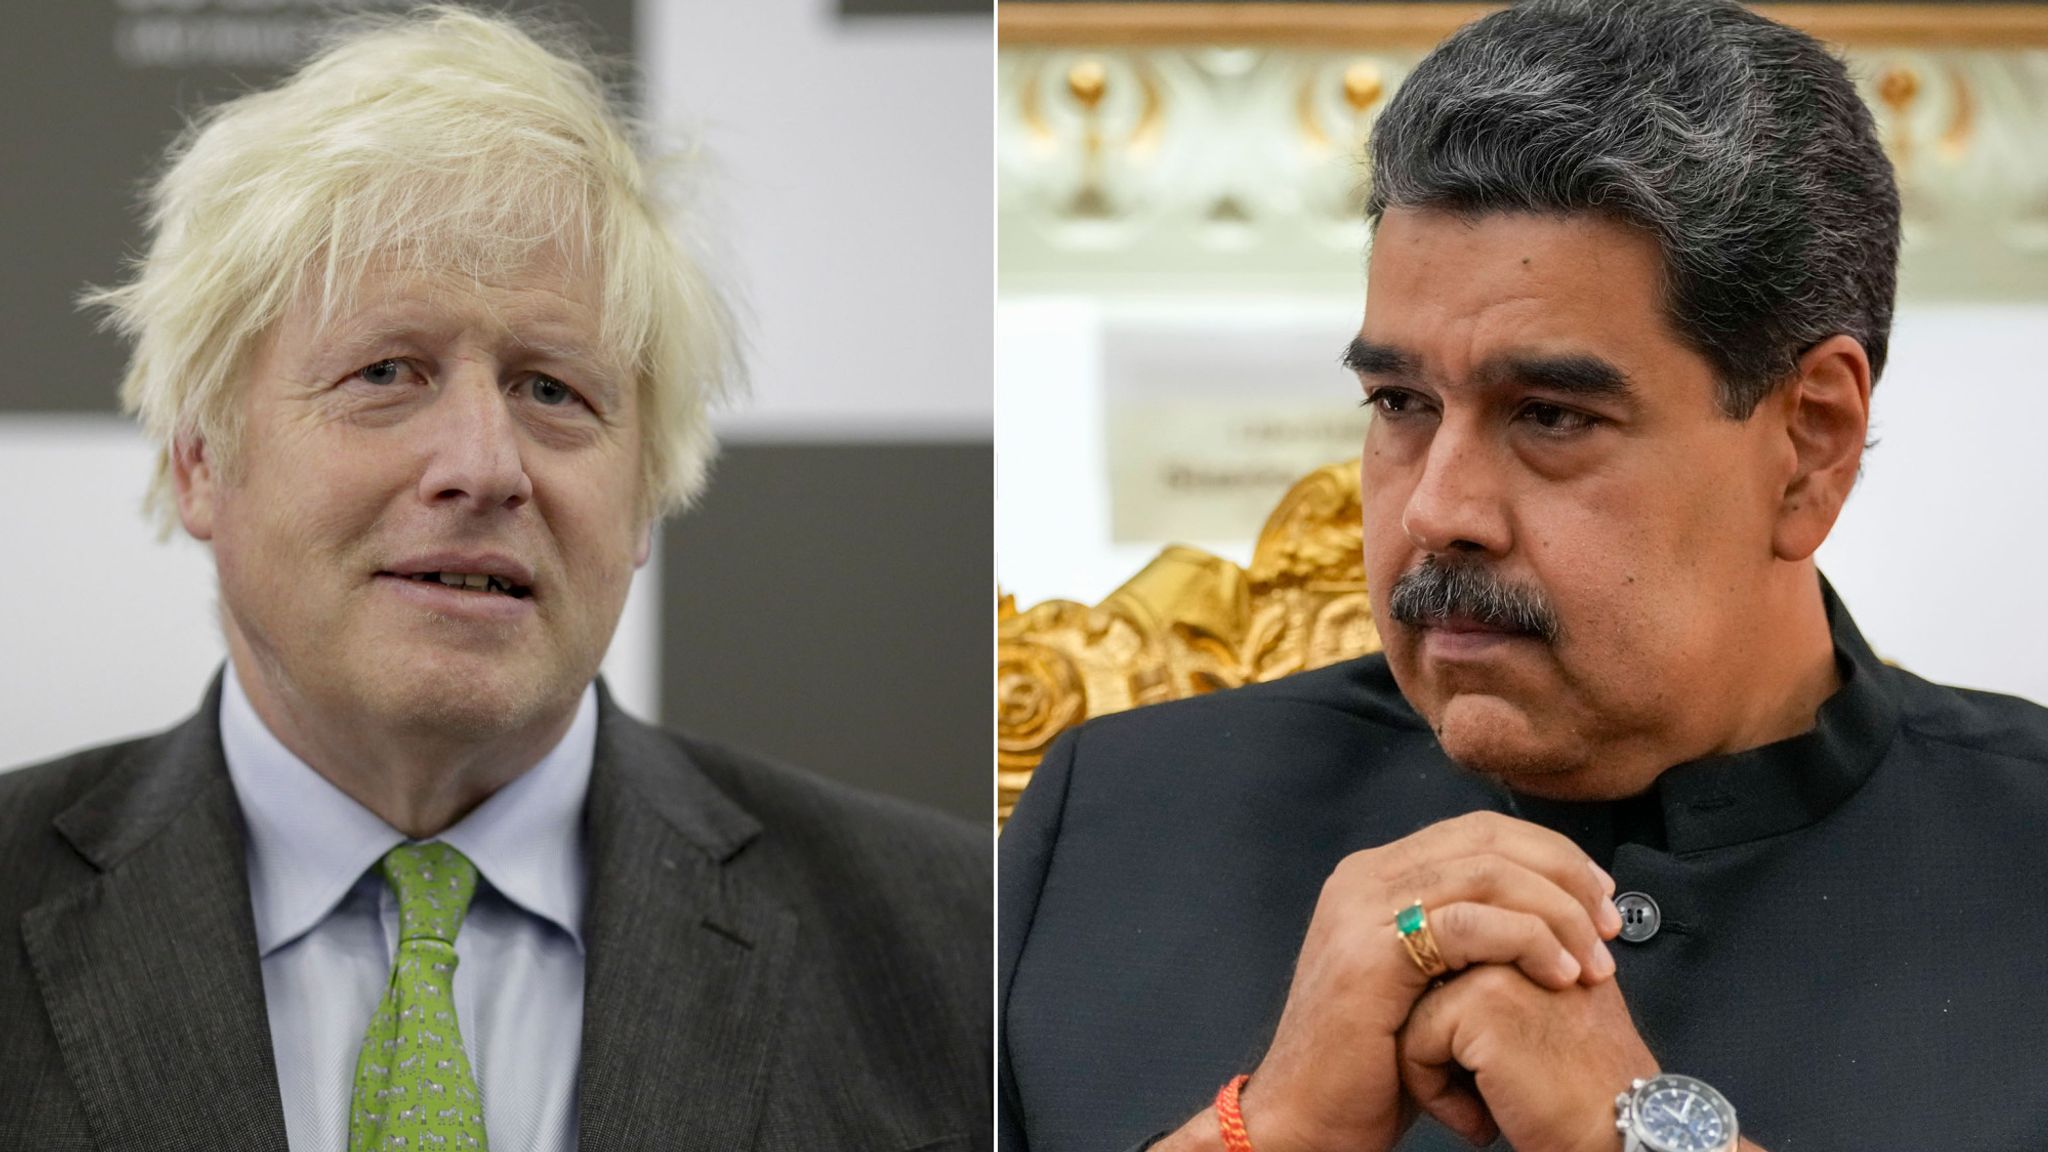 Boris Johnson unternimmt mutige diplomatische Schritte in Venezuela